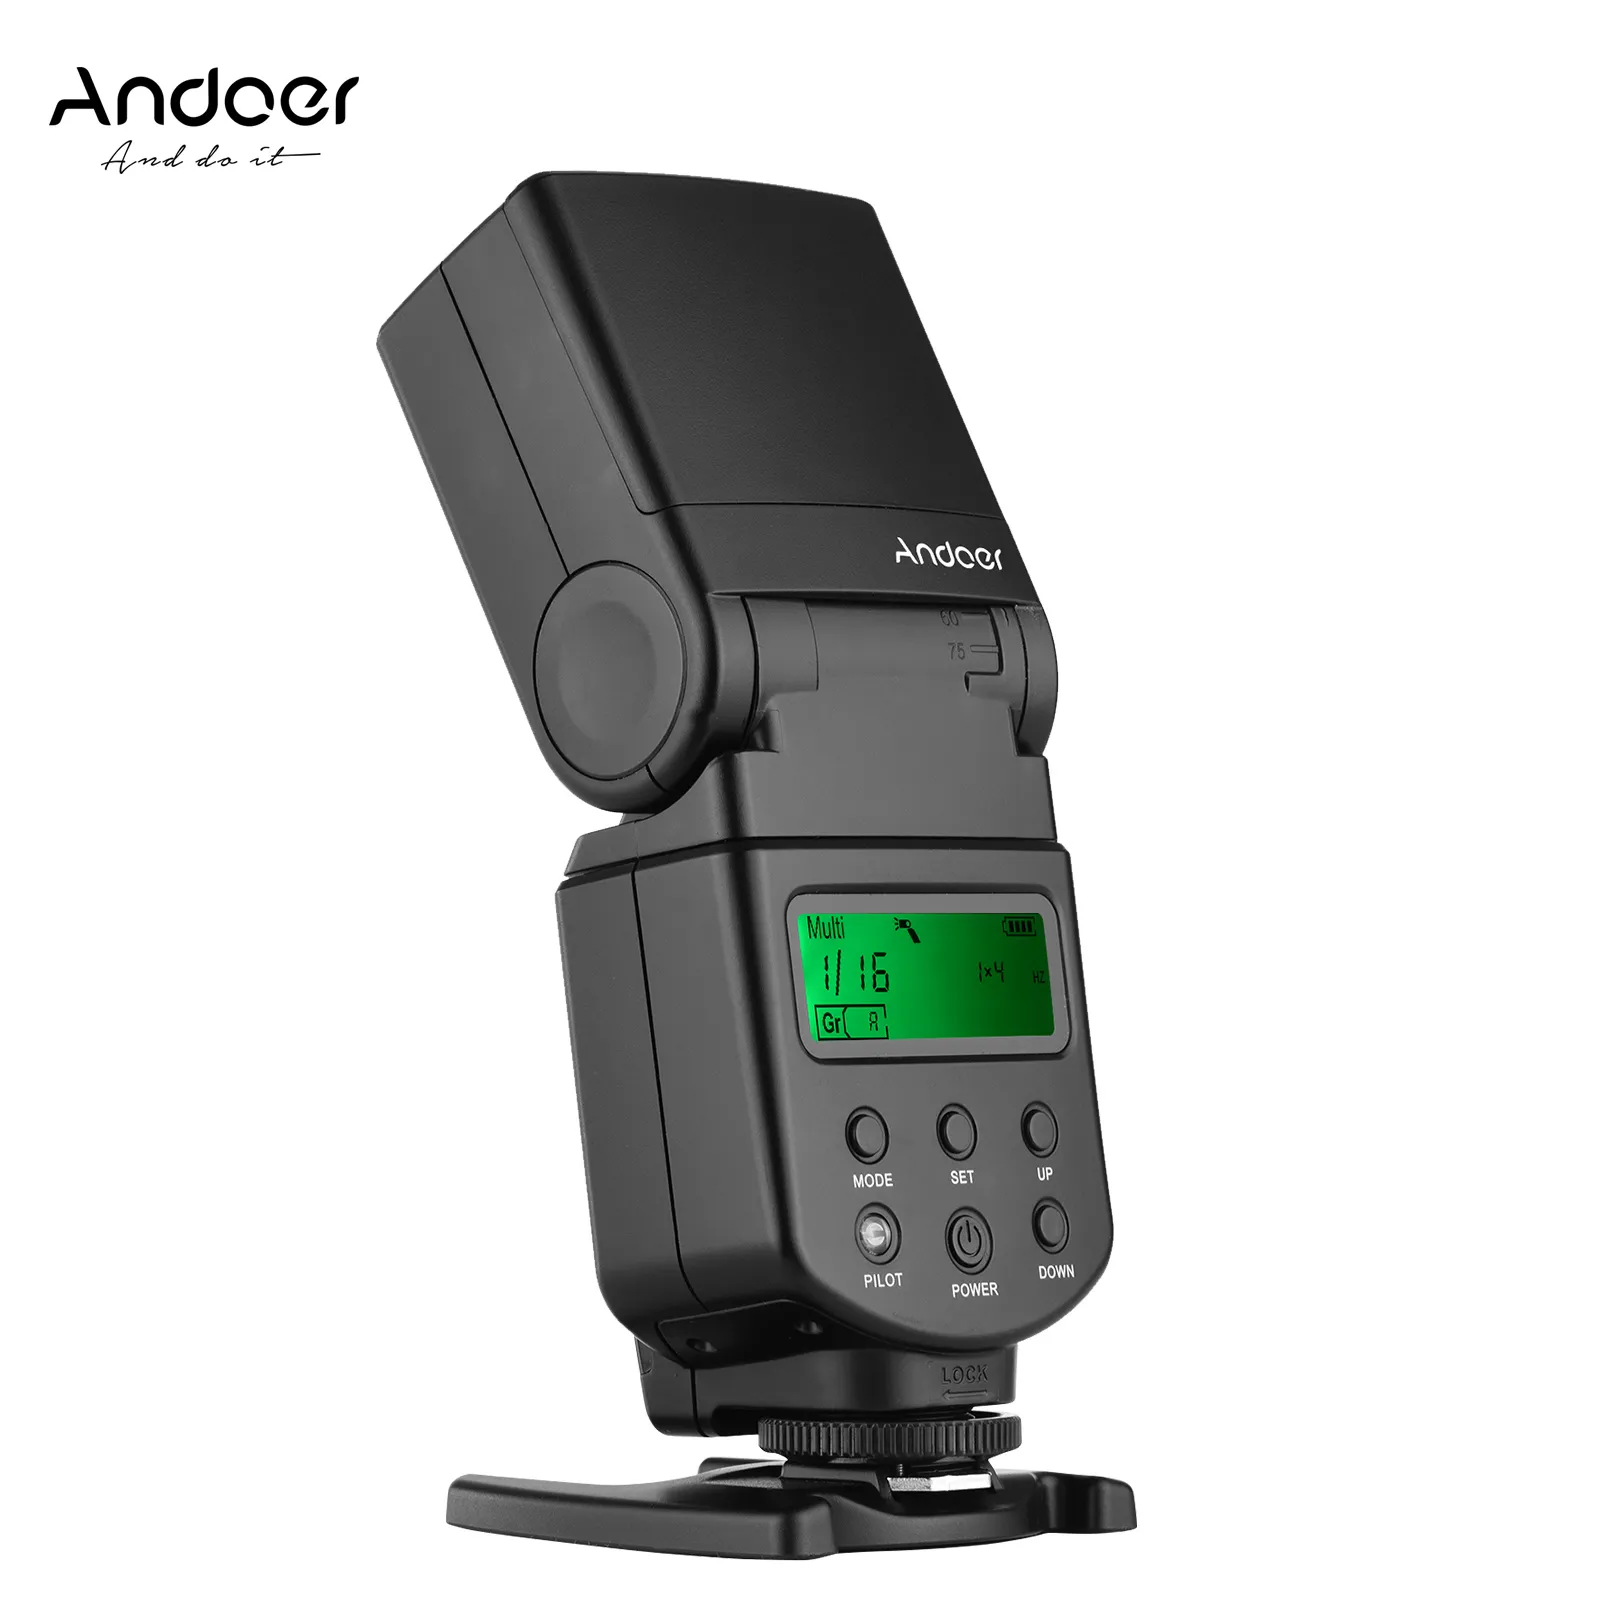 Andoer Flash Speedlite GN40 Adjustable LED Fill Light On-camera Flash With Bracket Replacement for Canon Nikon DSLR Cameras